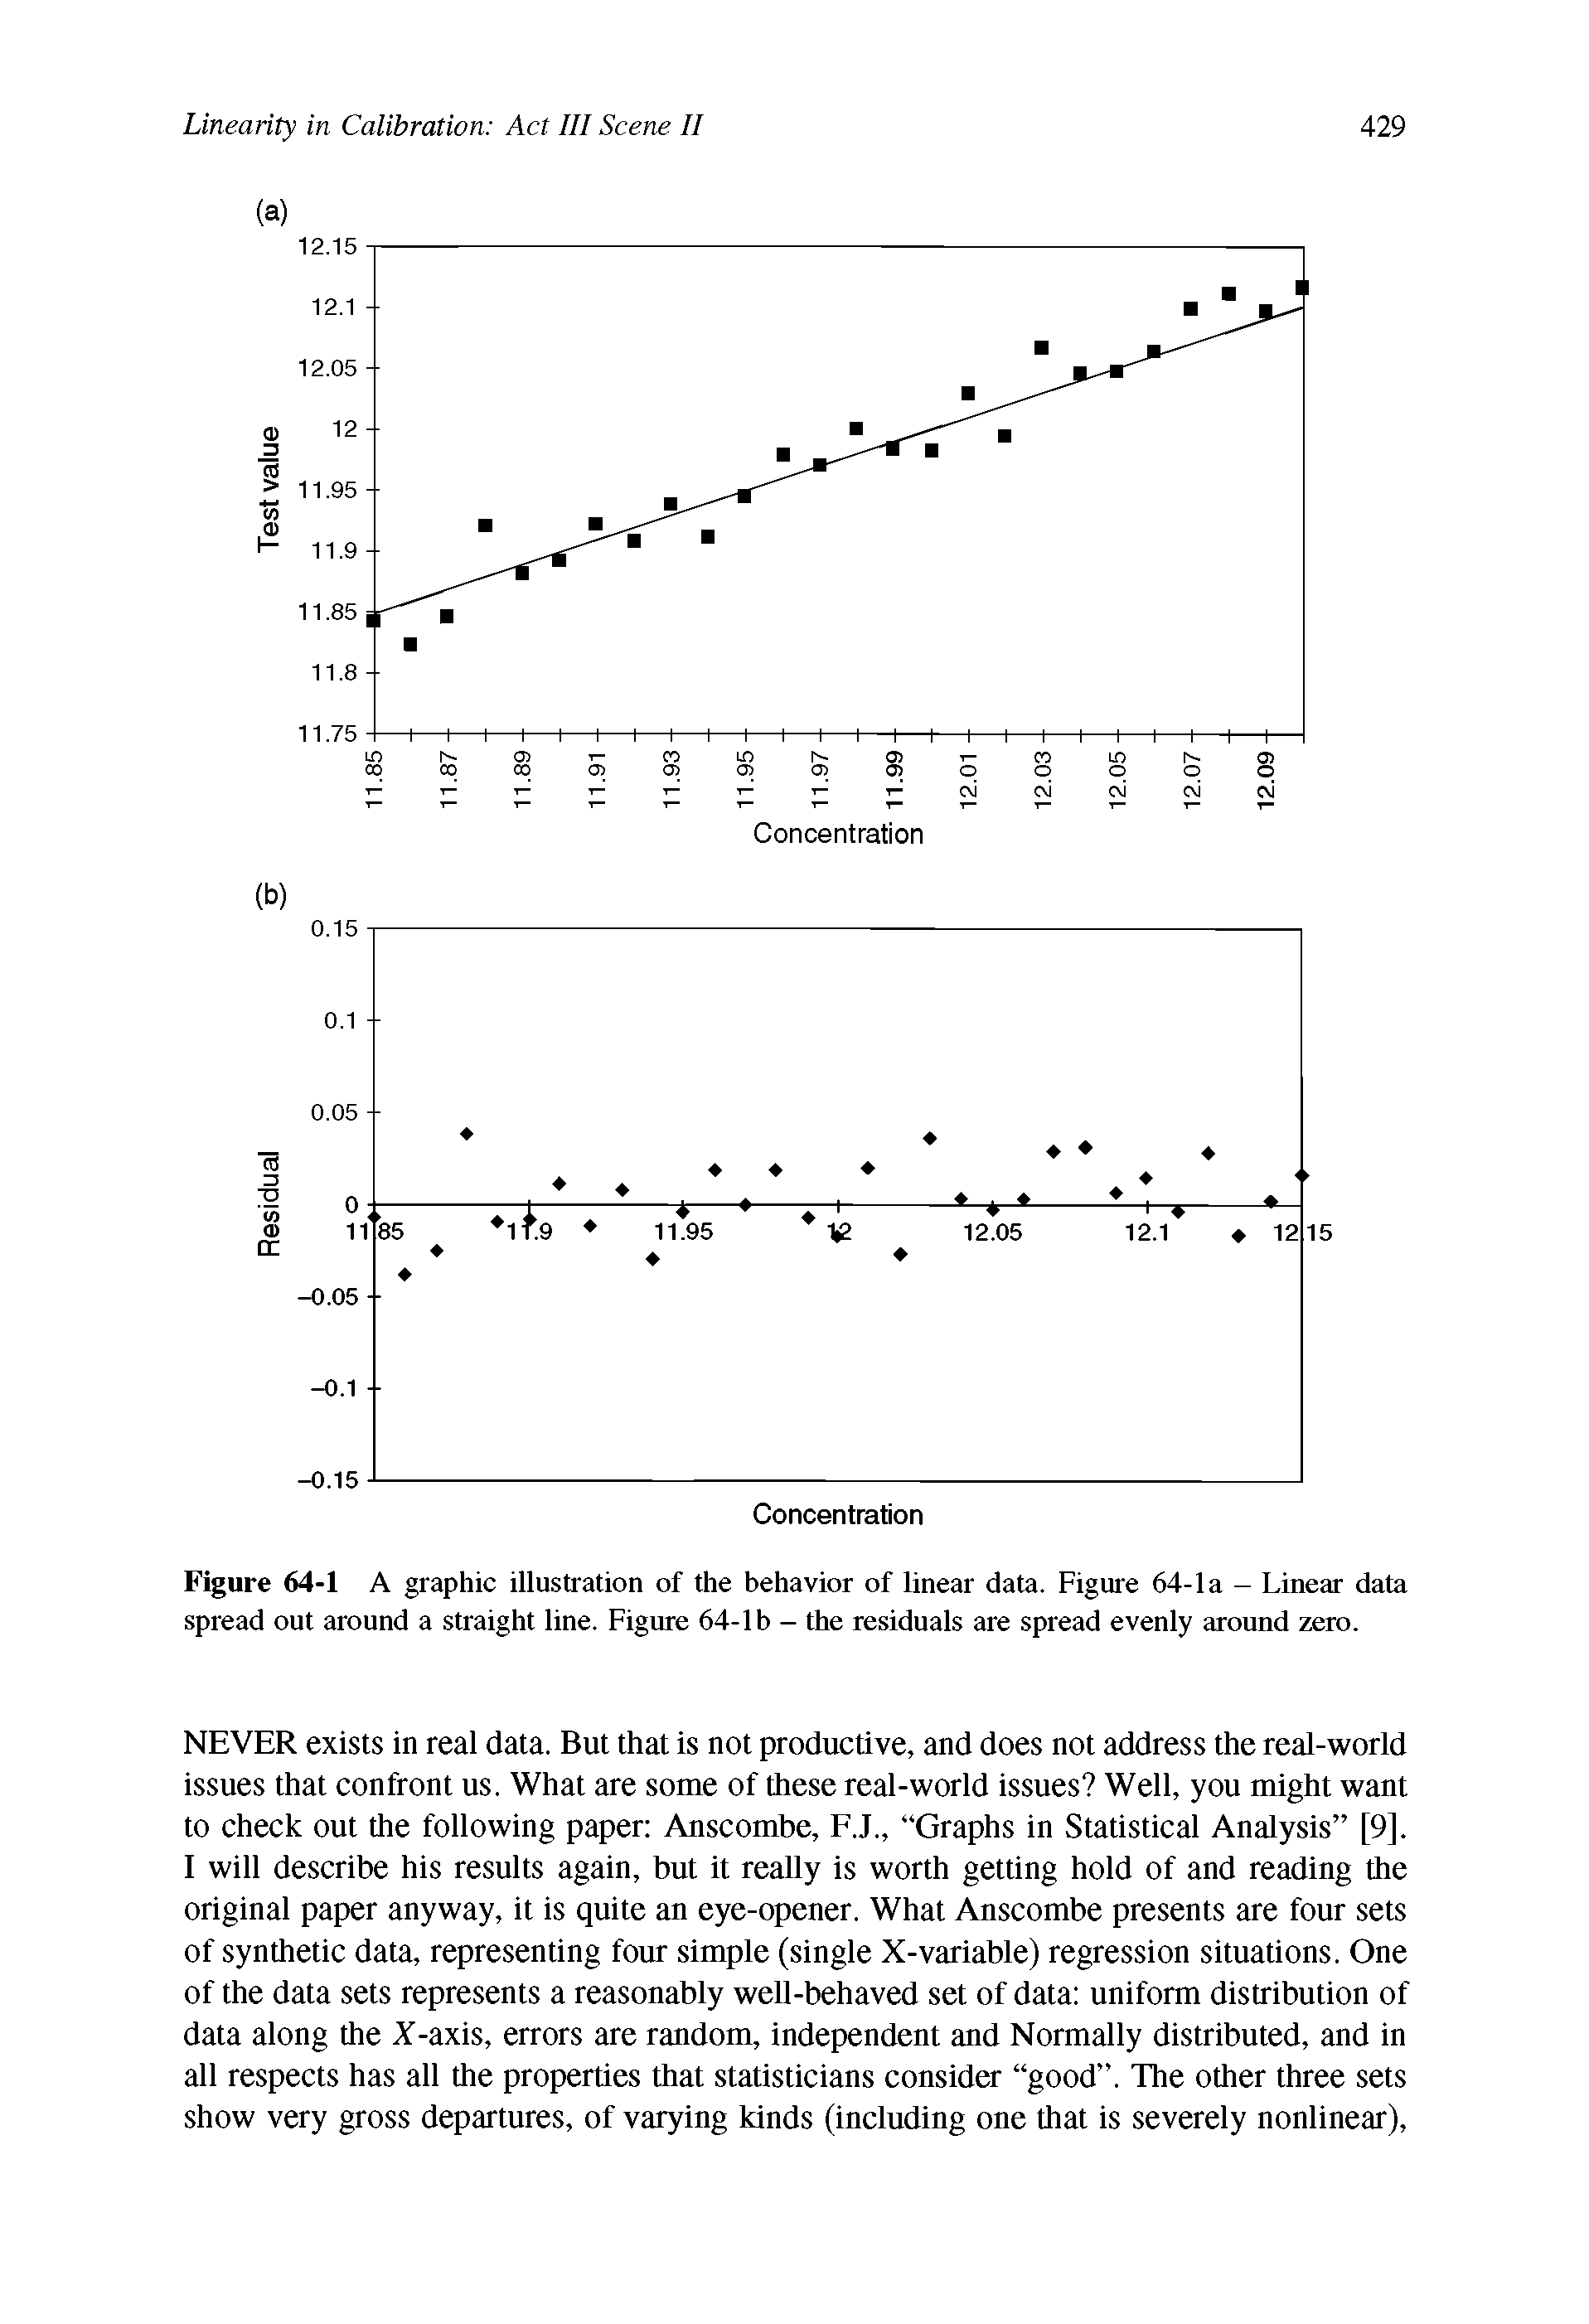 Figure 64-1 A graphic illustration of the behavior of linear data. Figure 64-la - Linear data spread out around a straight line. Figure 64-lb - the residuals are spread evenly around zero.